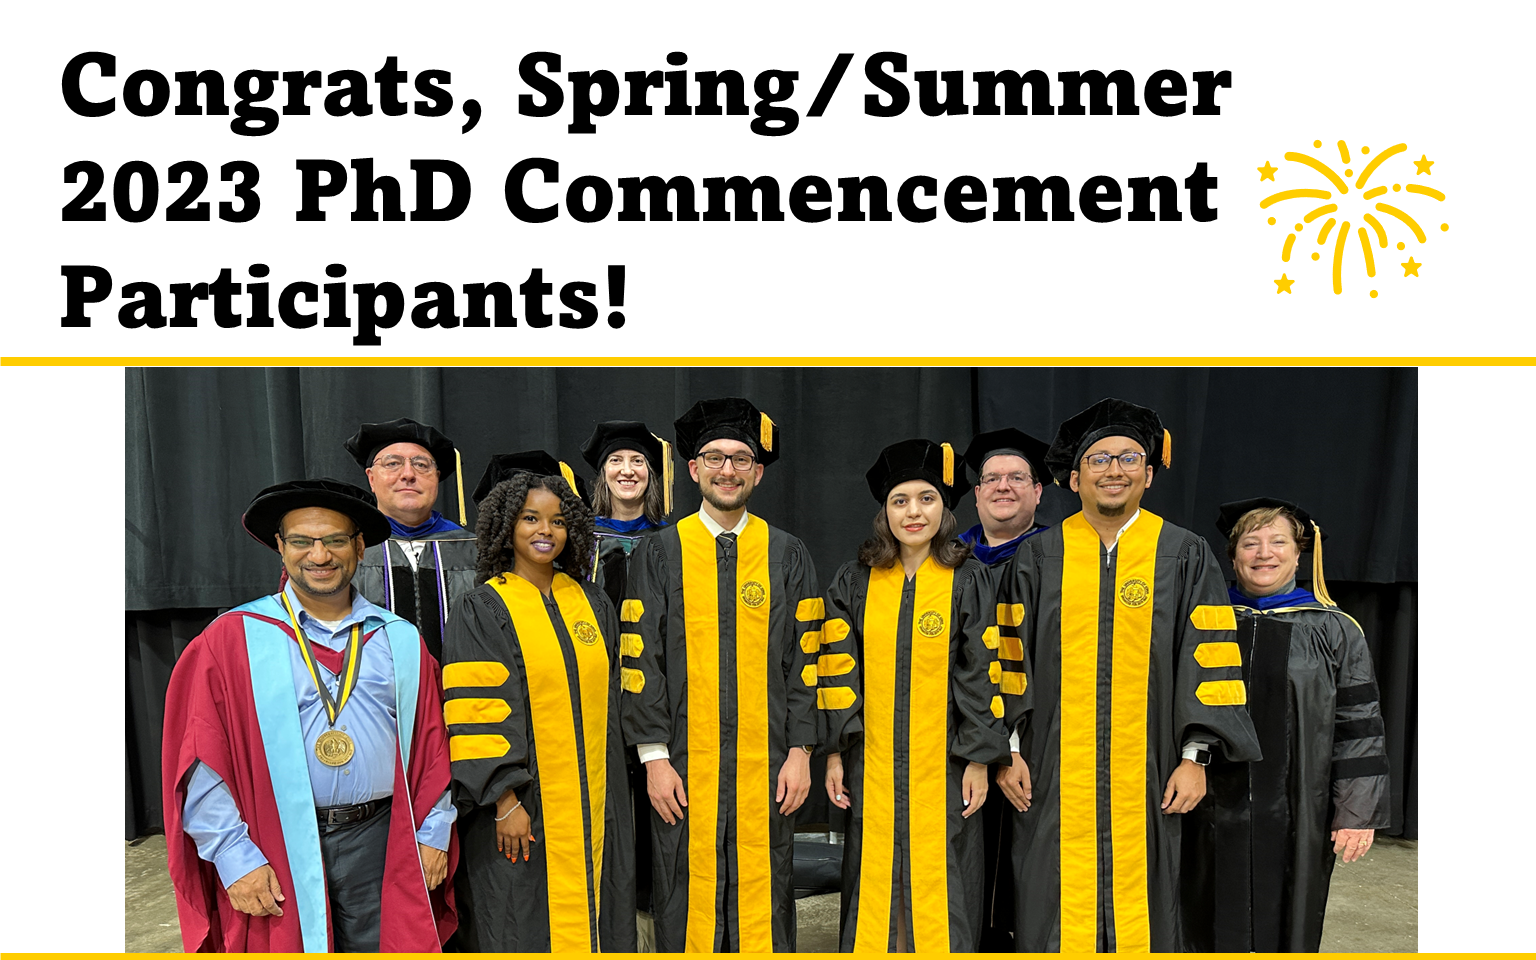 PhD Graduates spring 2023